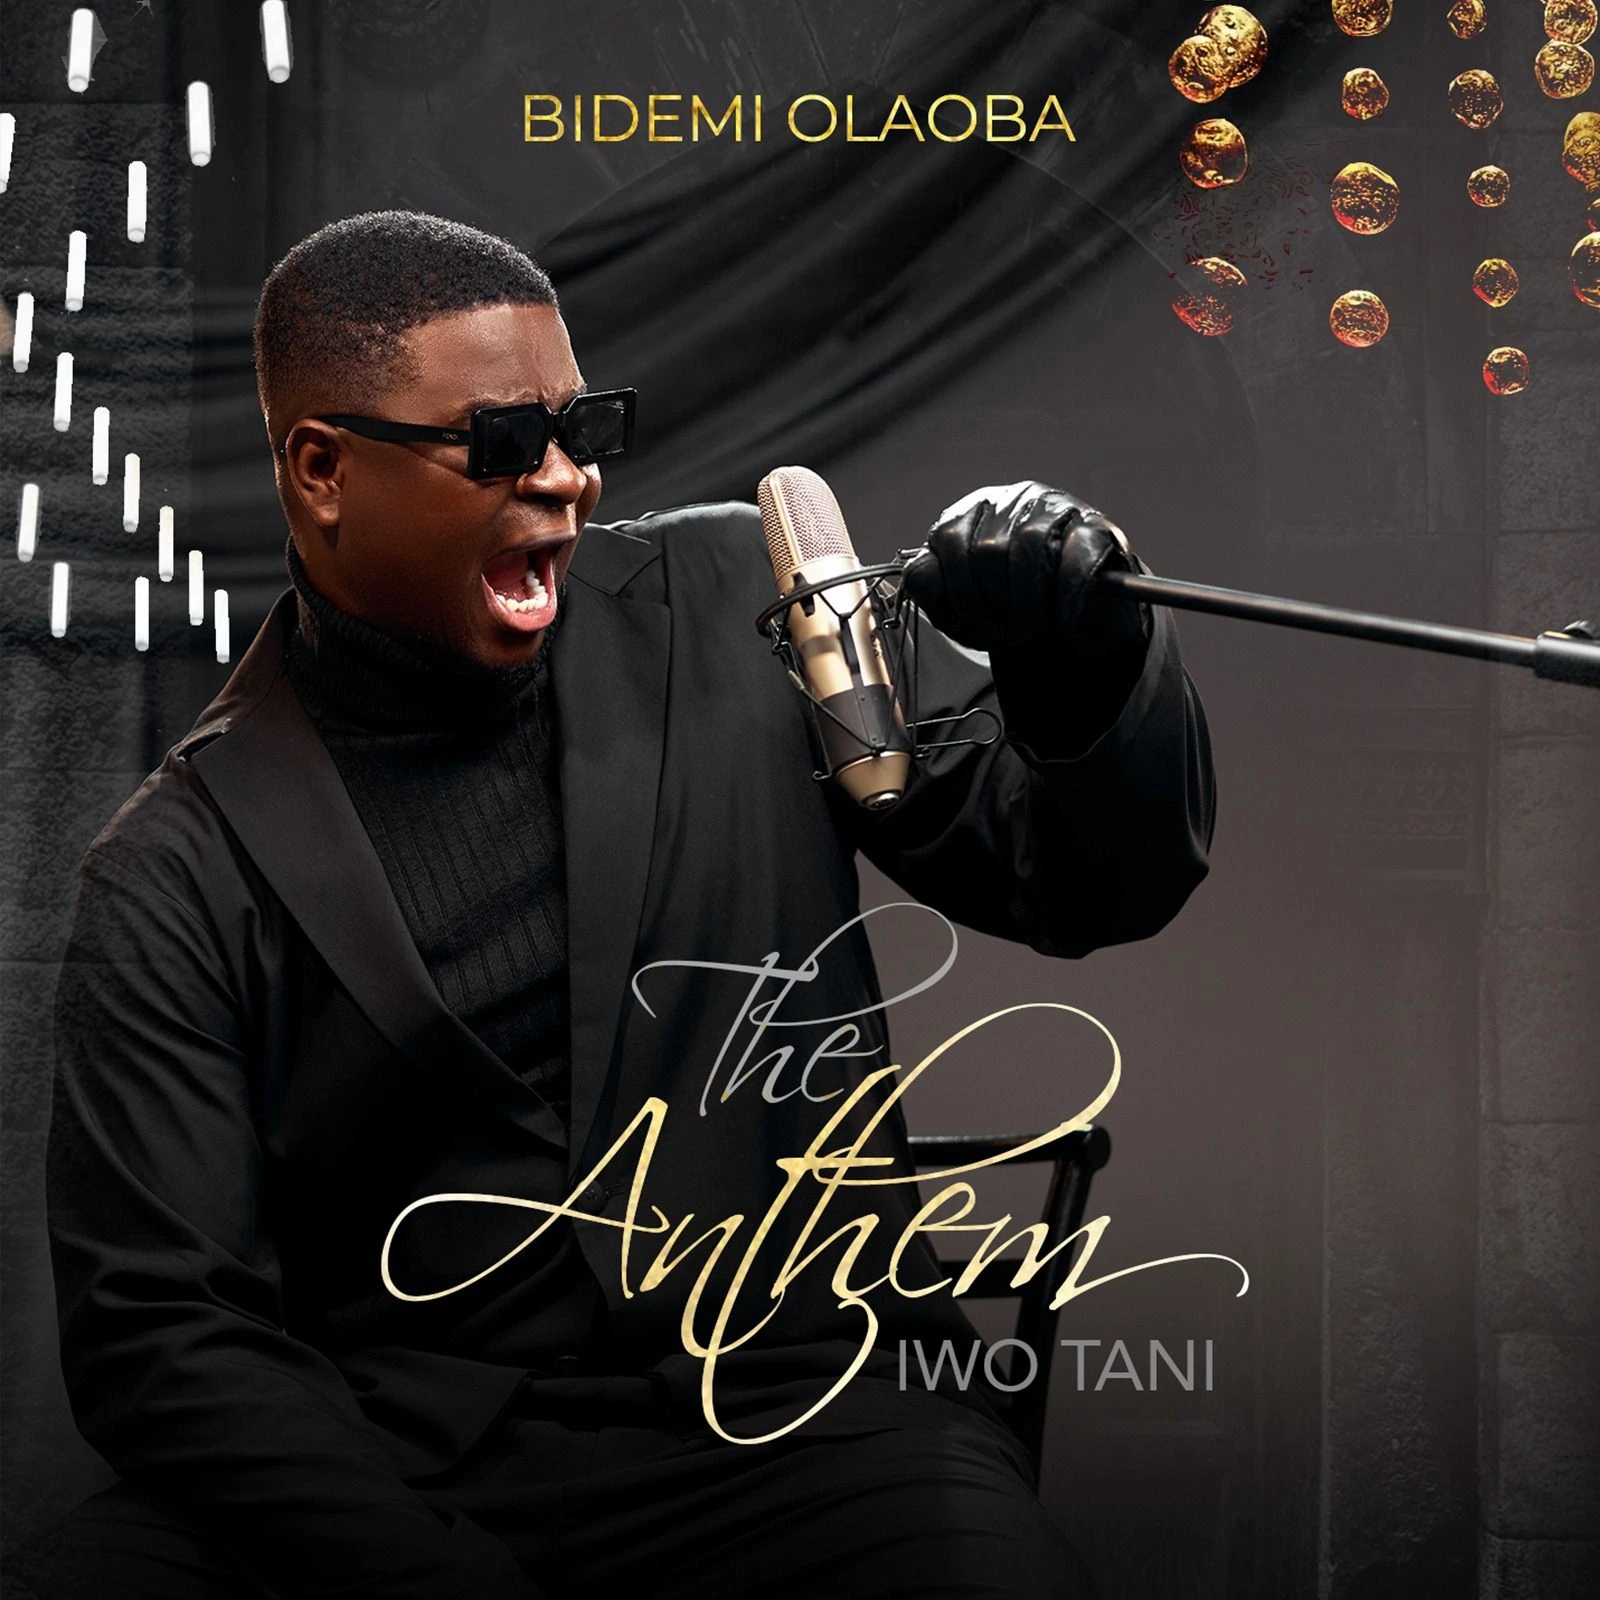 Bidemi Olaoba – The Anthem (Iwo Tani) mp3 download